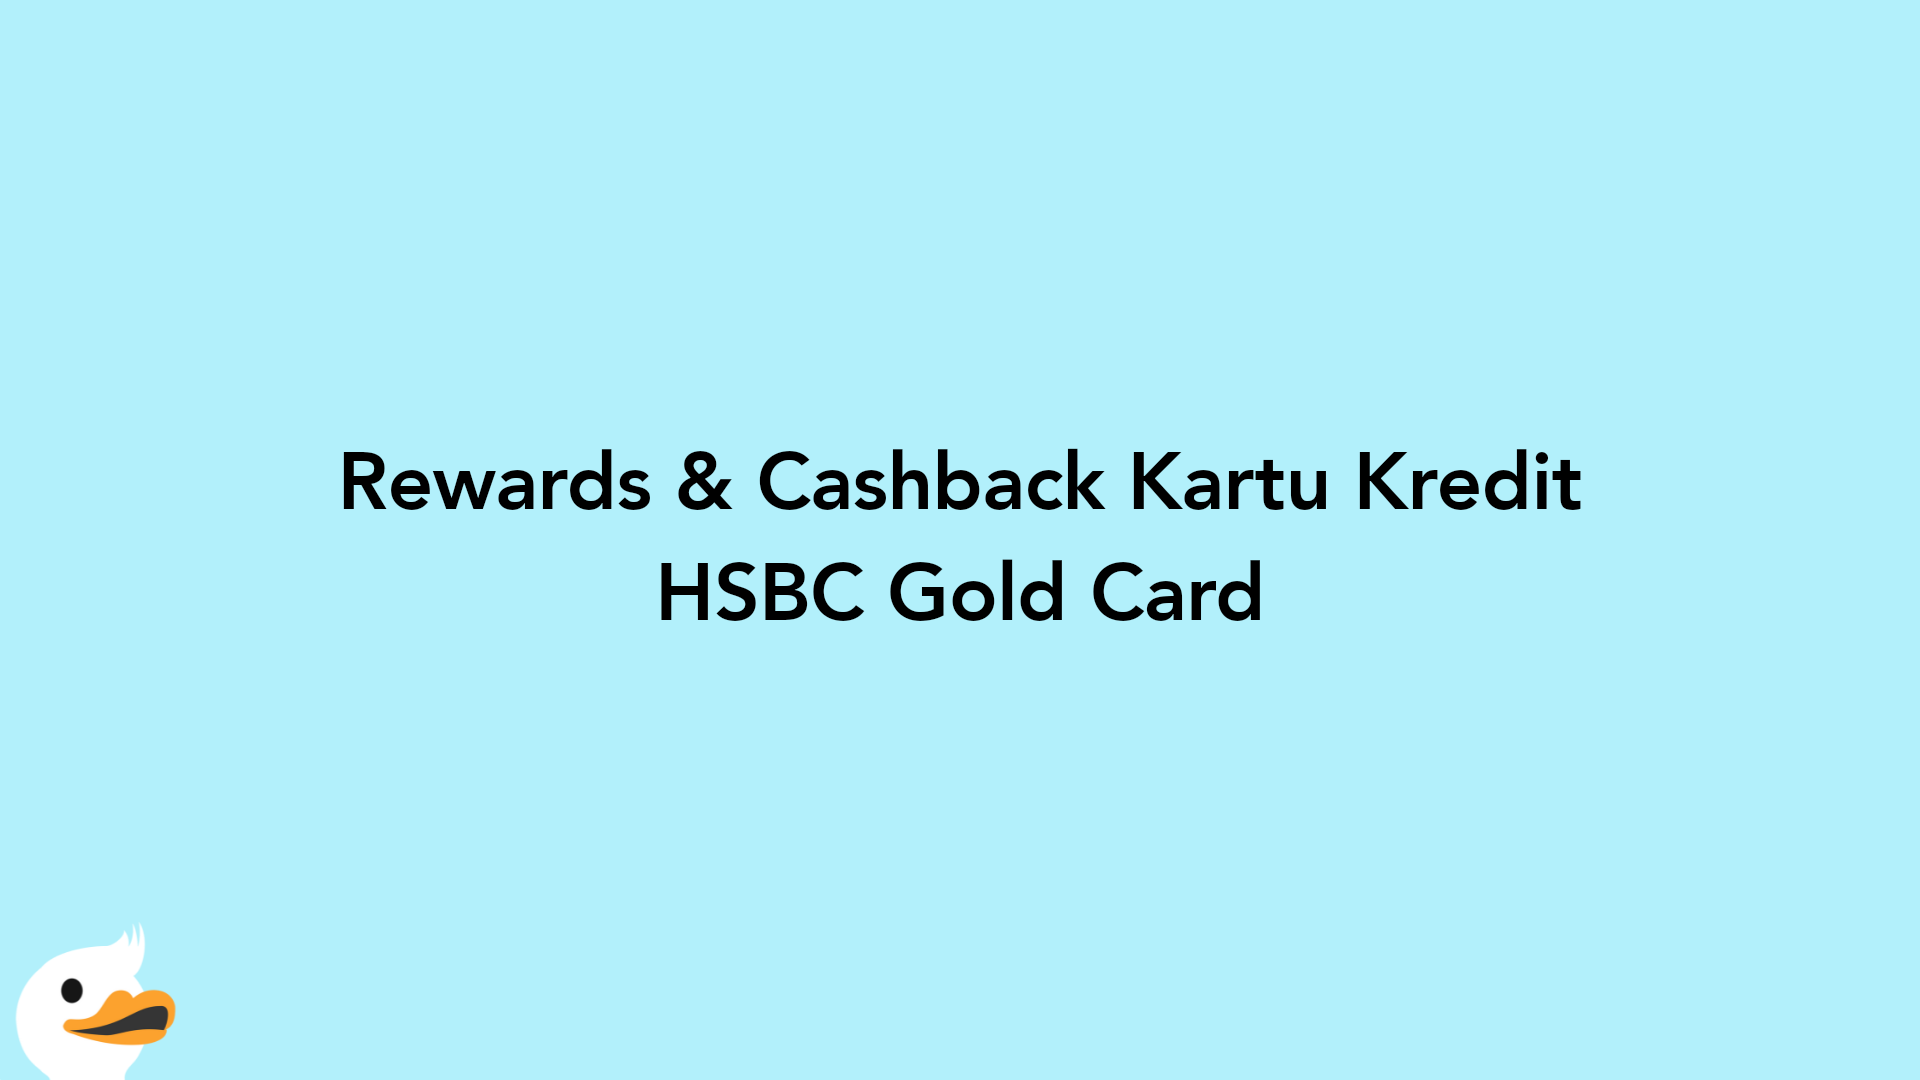 Rewards & Cashback Kartu Kredit HSBC Gold Card